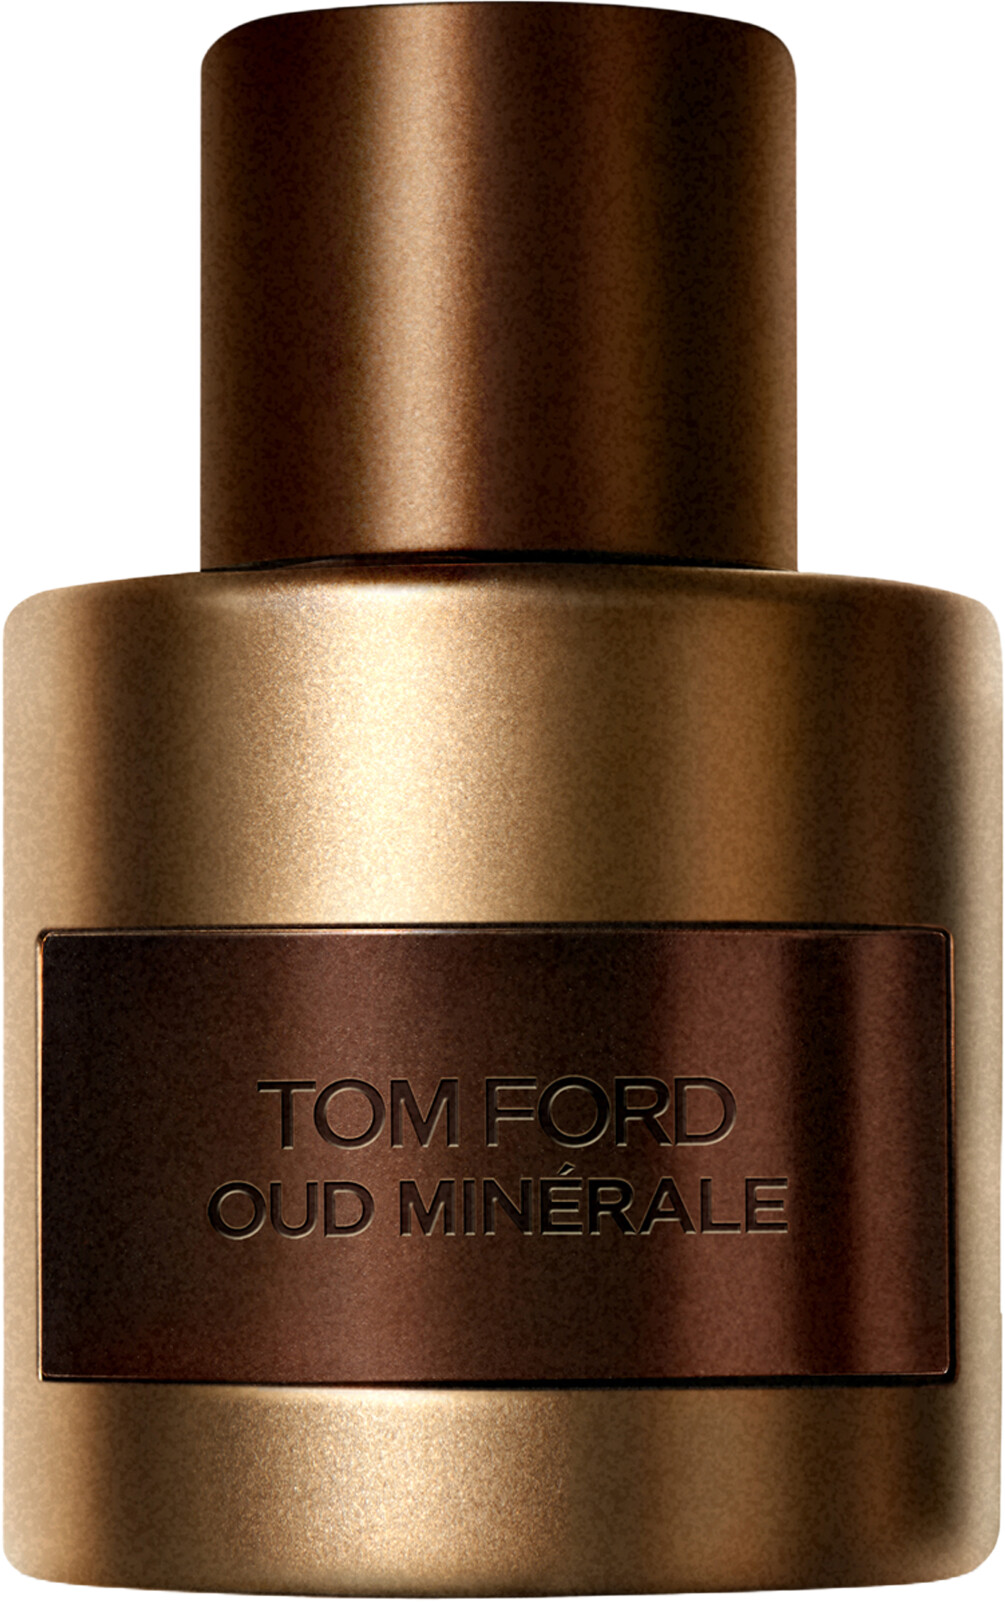 Tom Ford Oud Minerale Eau de Parfum Spray 50ml